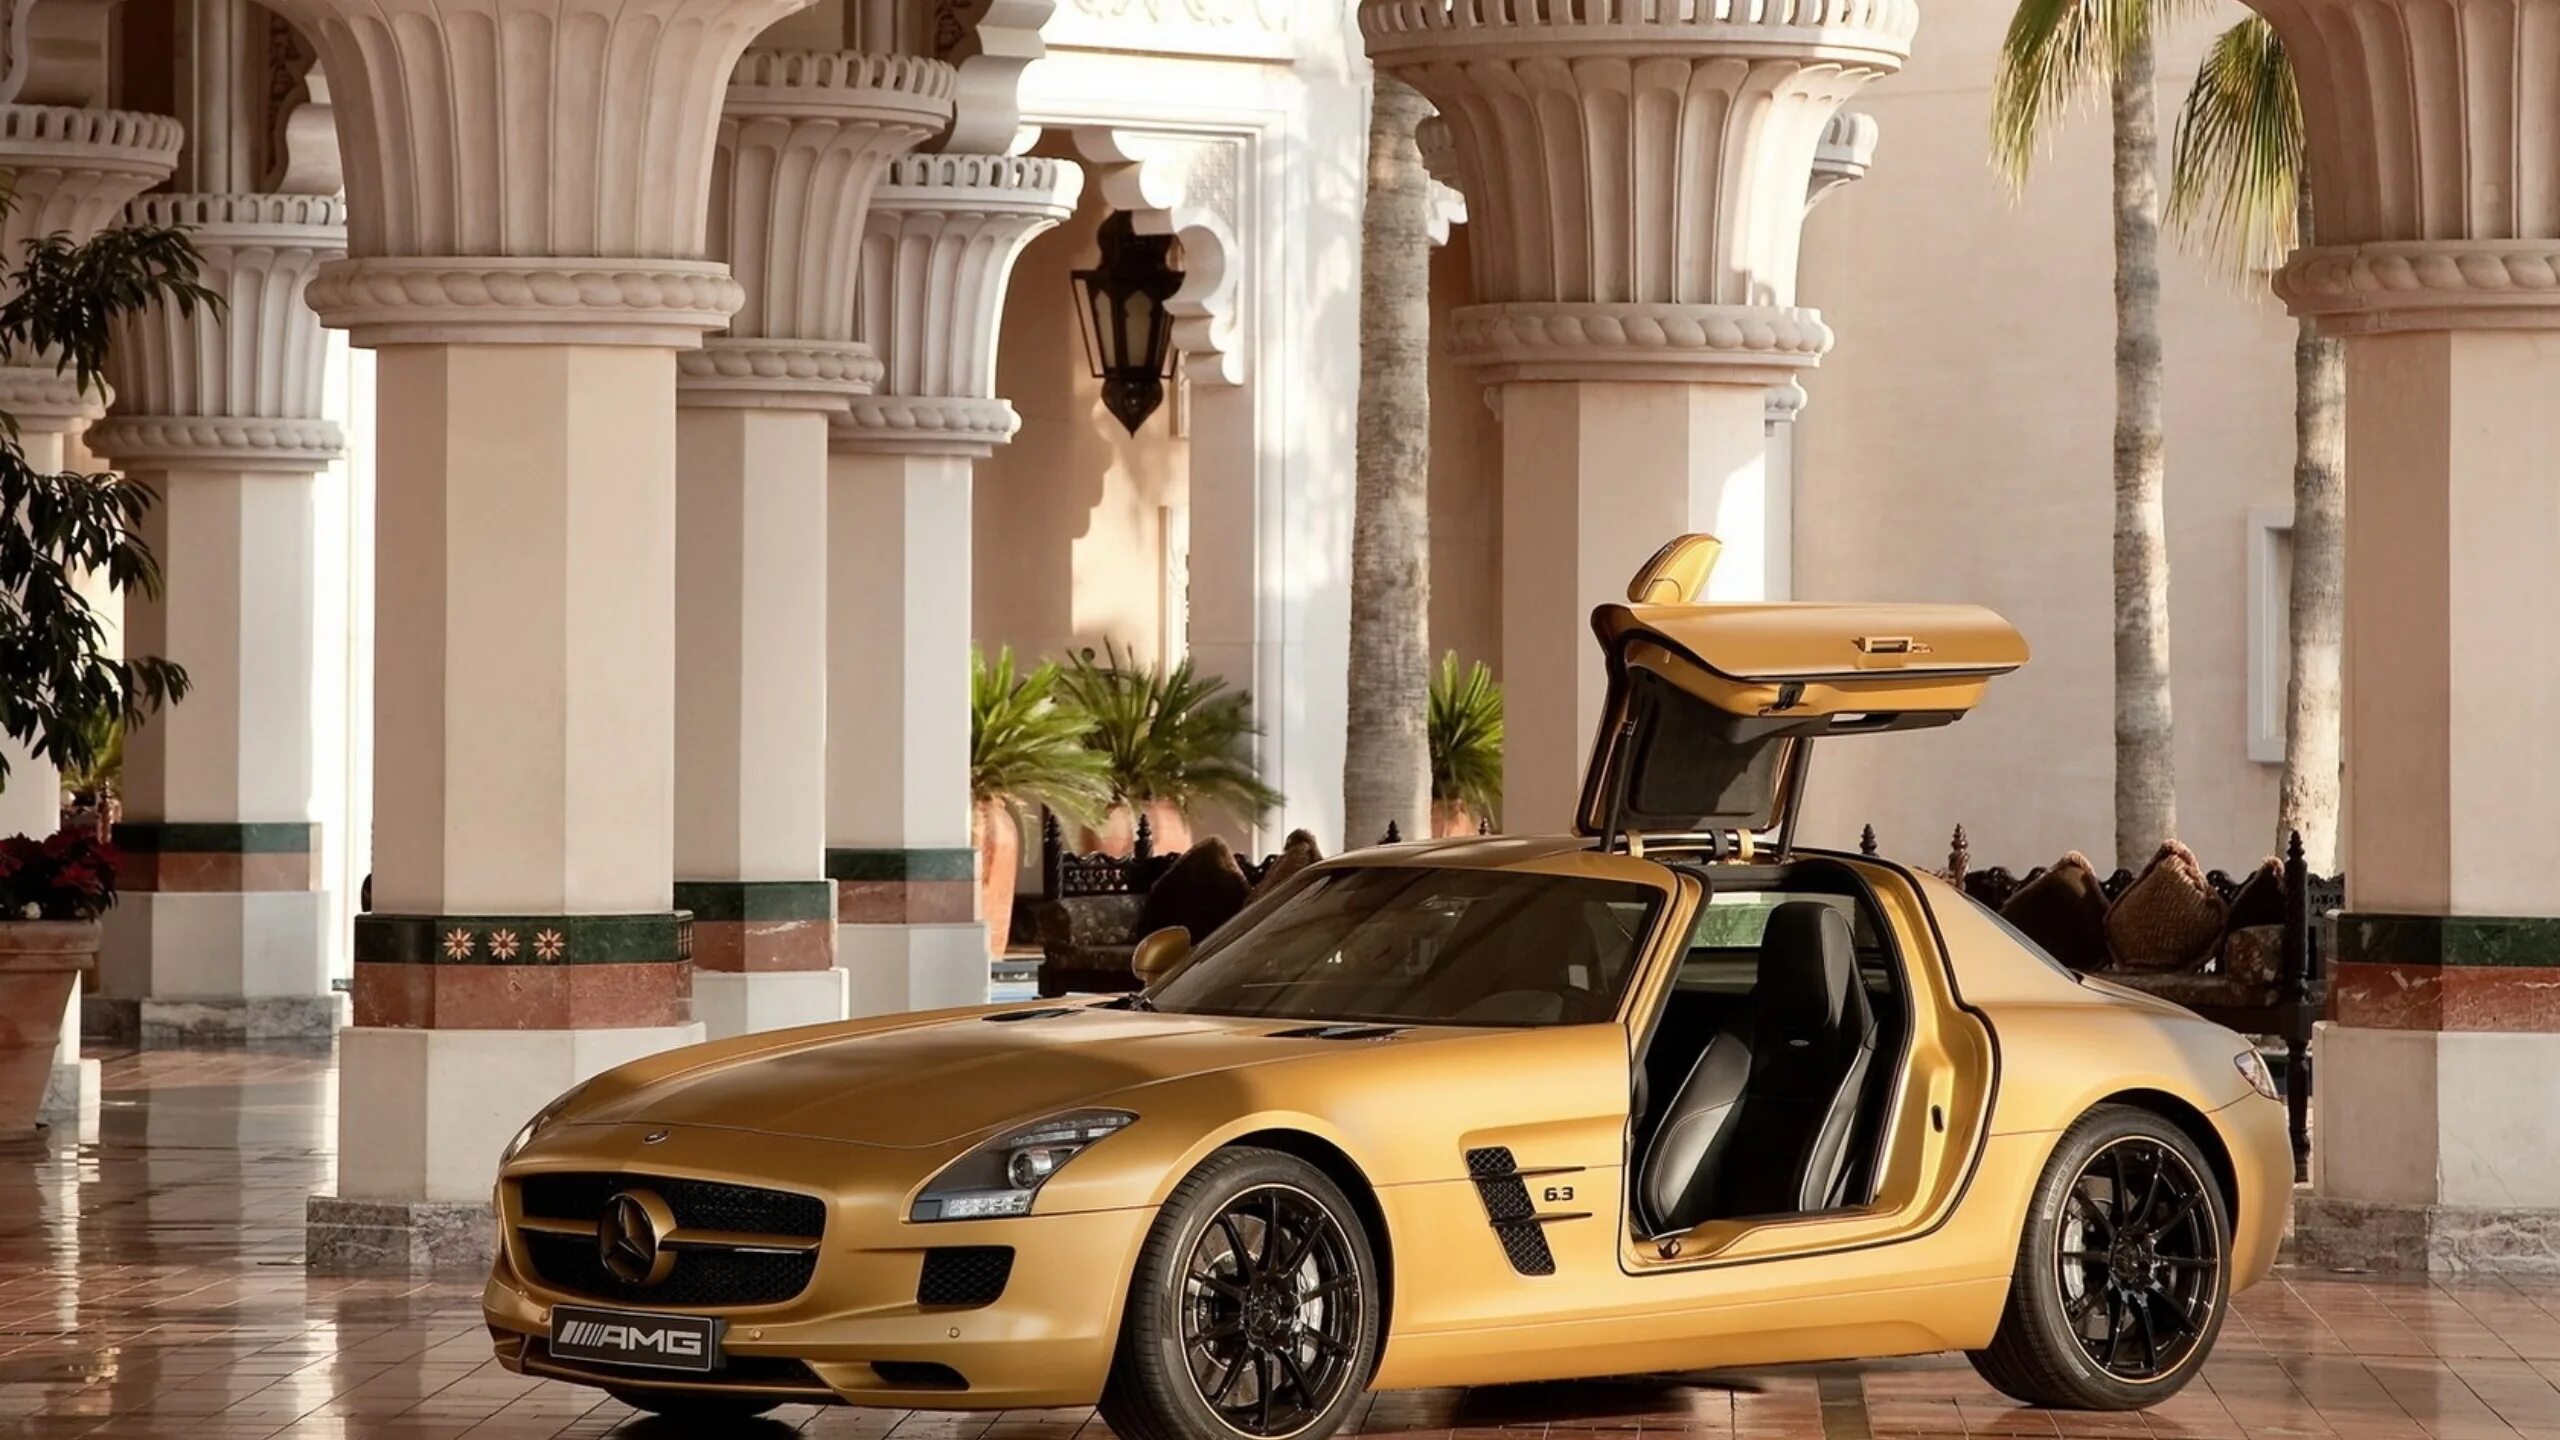 Включи мир машин. Мерседес СЛС АМГ золотой. Мерседес Бенц СЛС АМГ В Дубае. Mercedes AMG SLS Desert Gold. 2010 Mercedes Benz SLS AMG Desert.